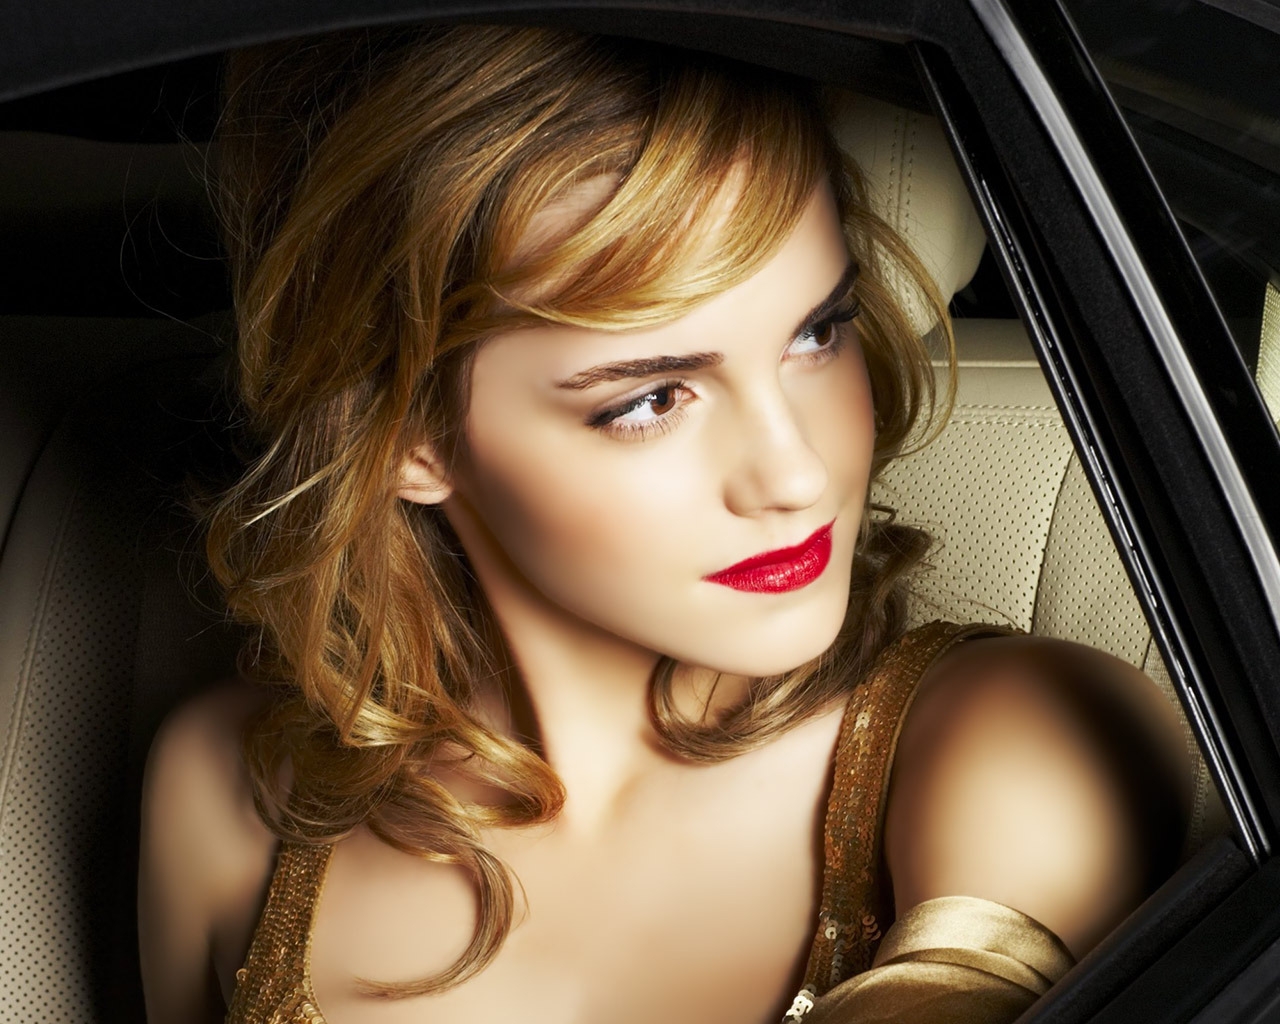 Emma Watson for 1280 x 1024 resolution